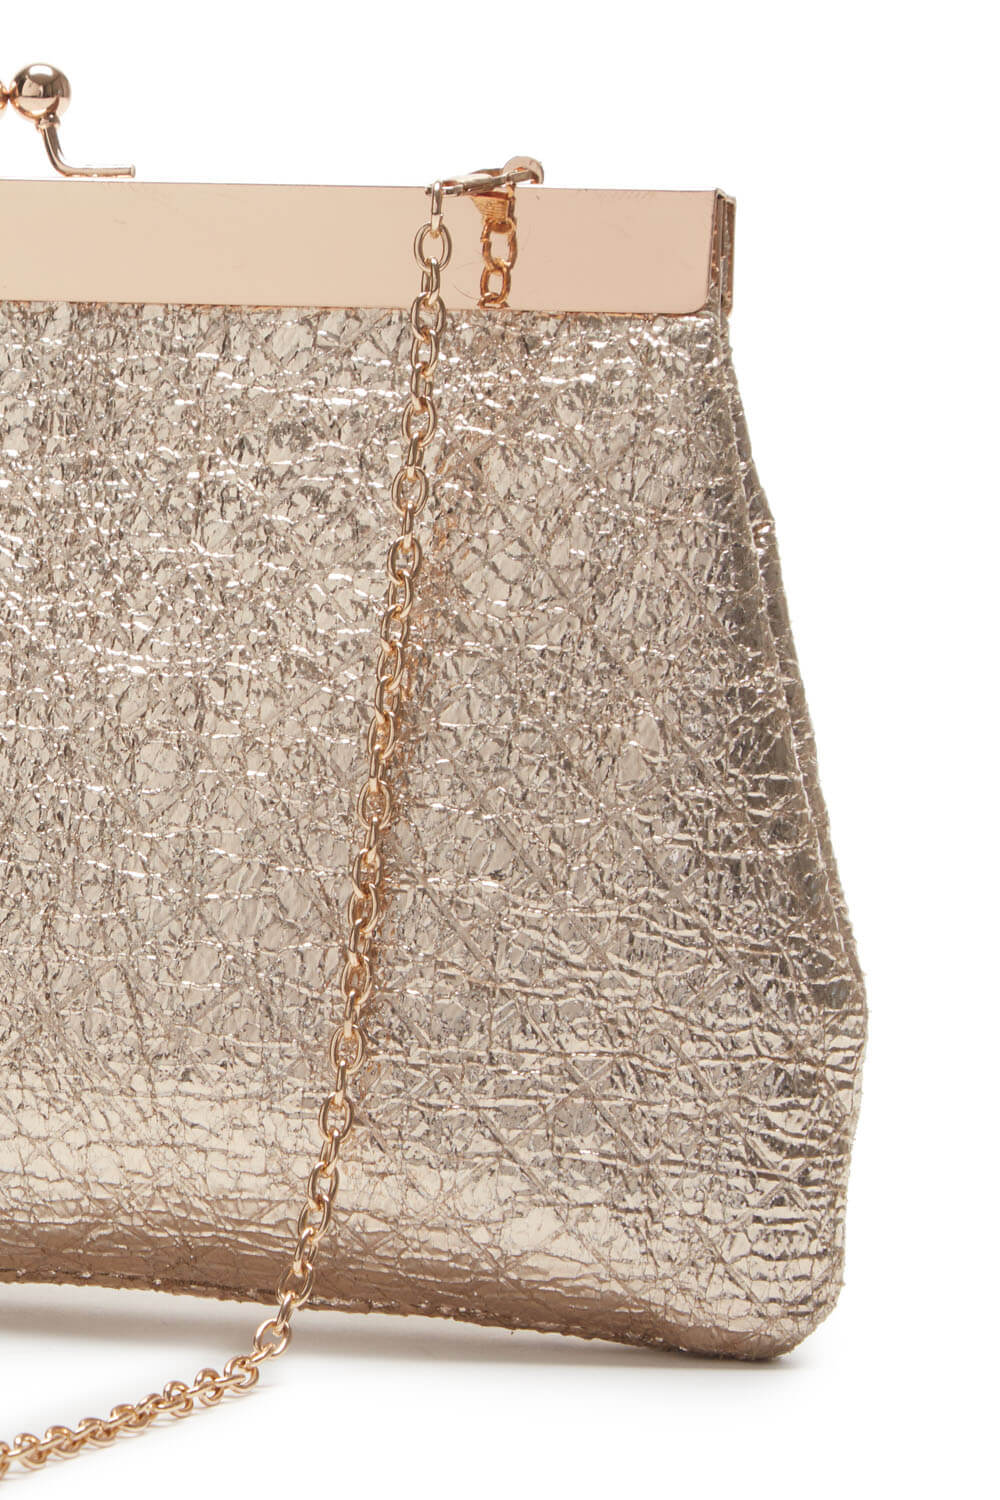 Gold Metallic Crinkle Texture Clutch Bag, Image 4 of 4